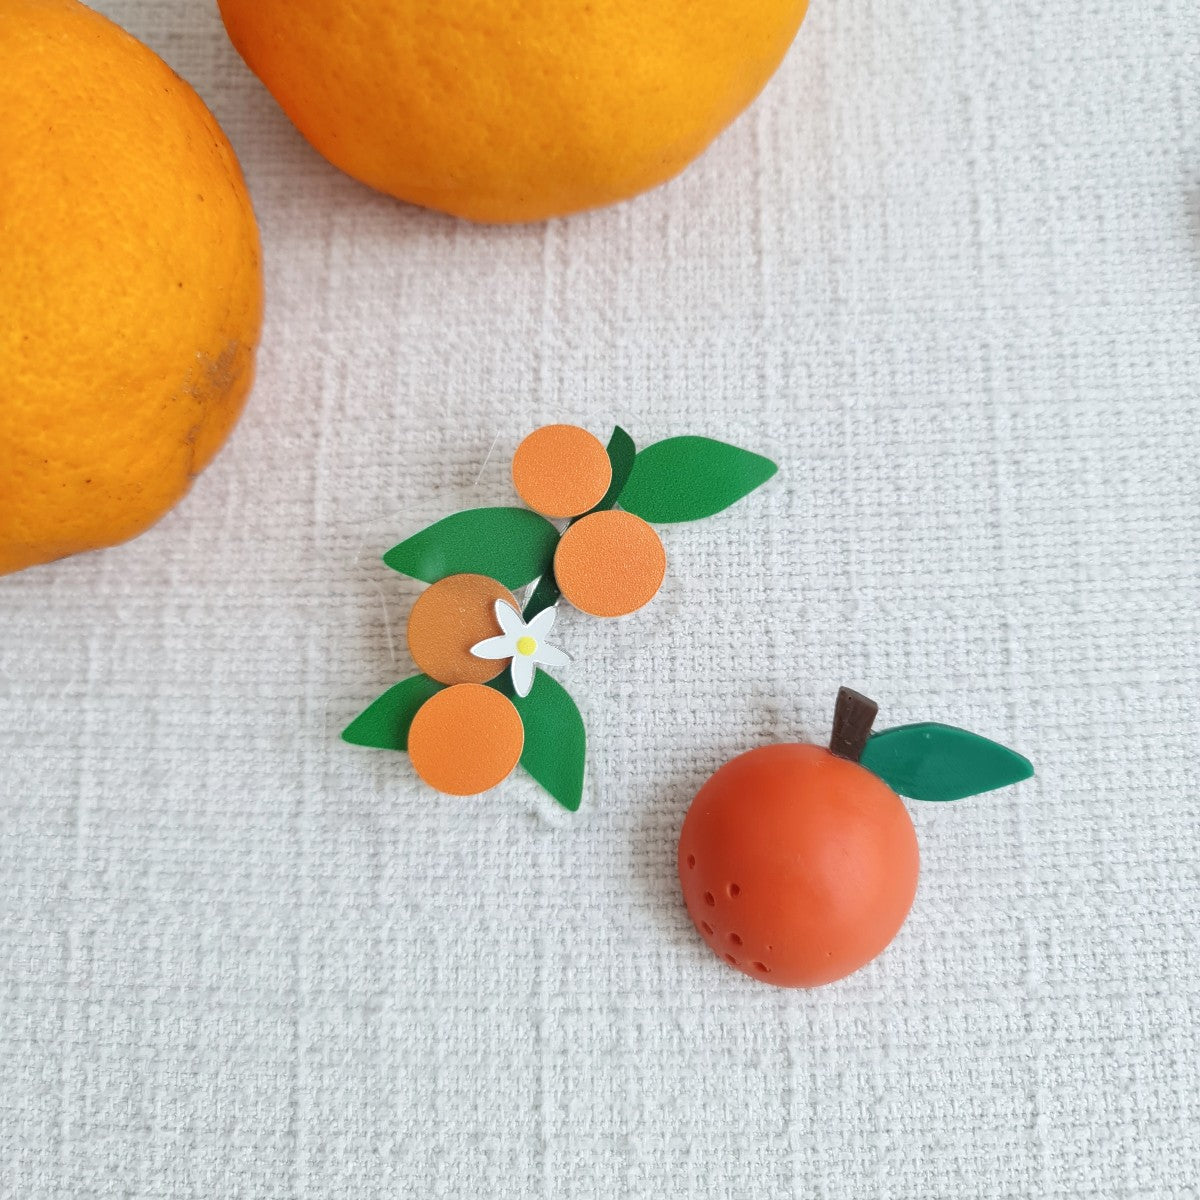 Mandarin Orange on the Vine Brooch